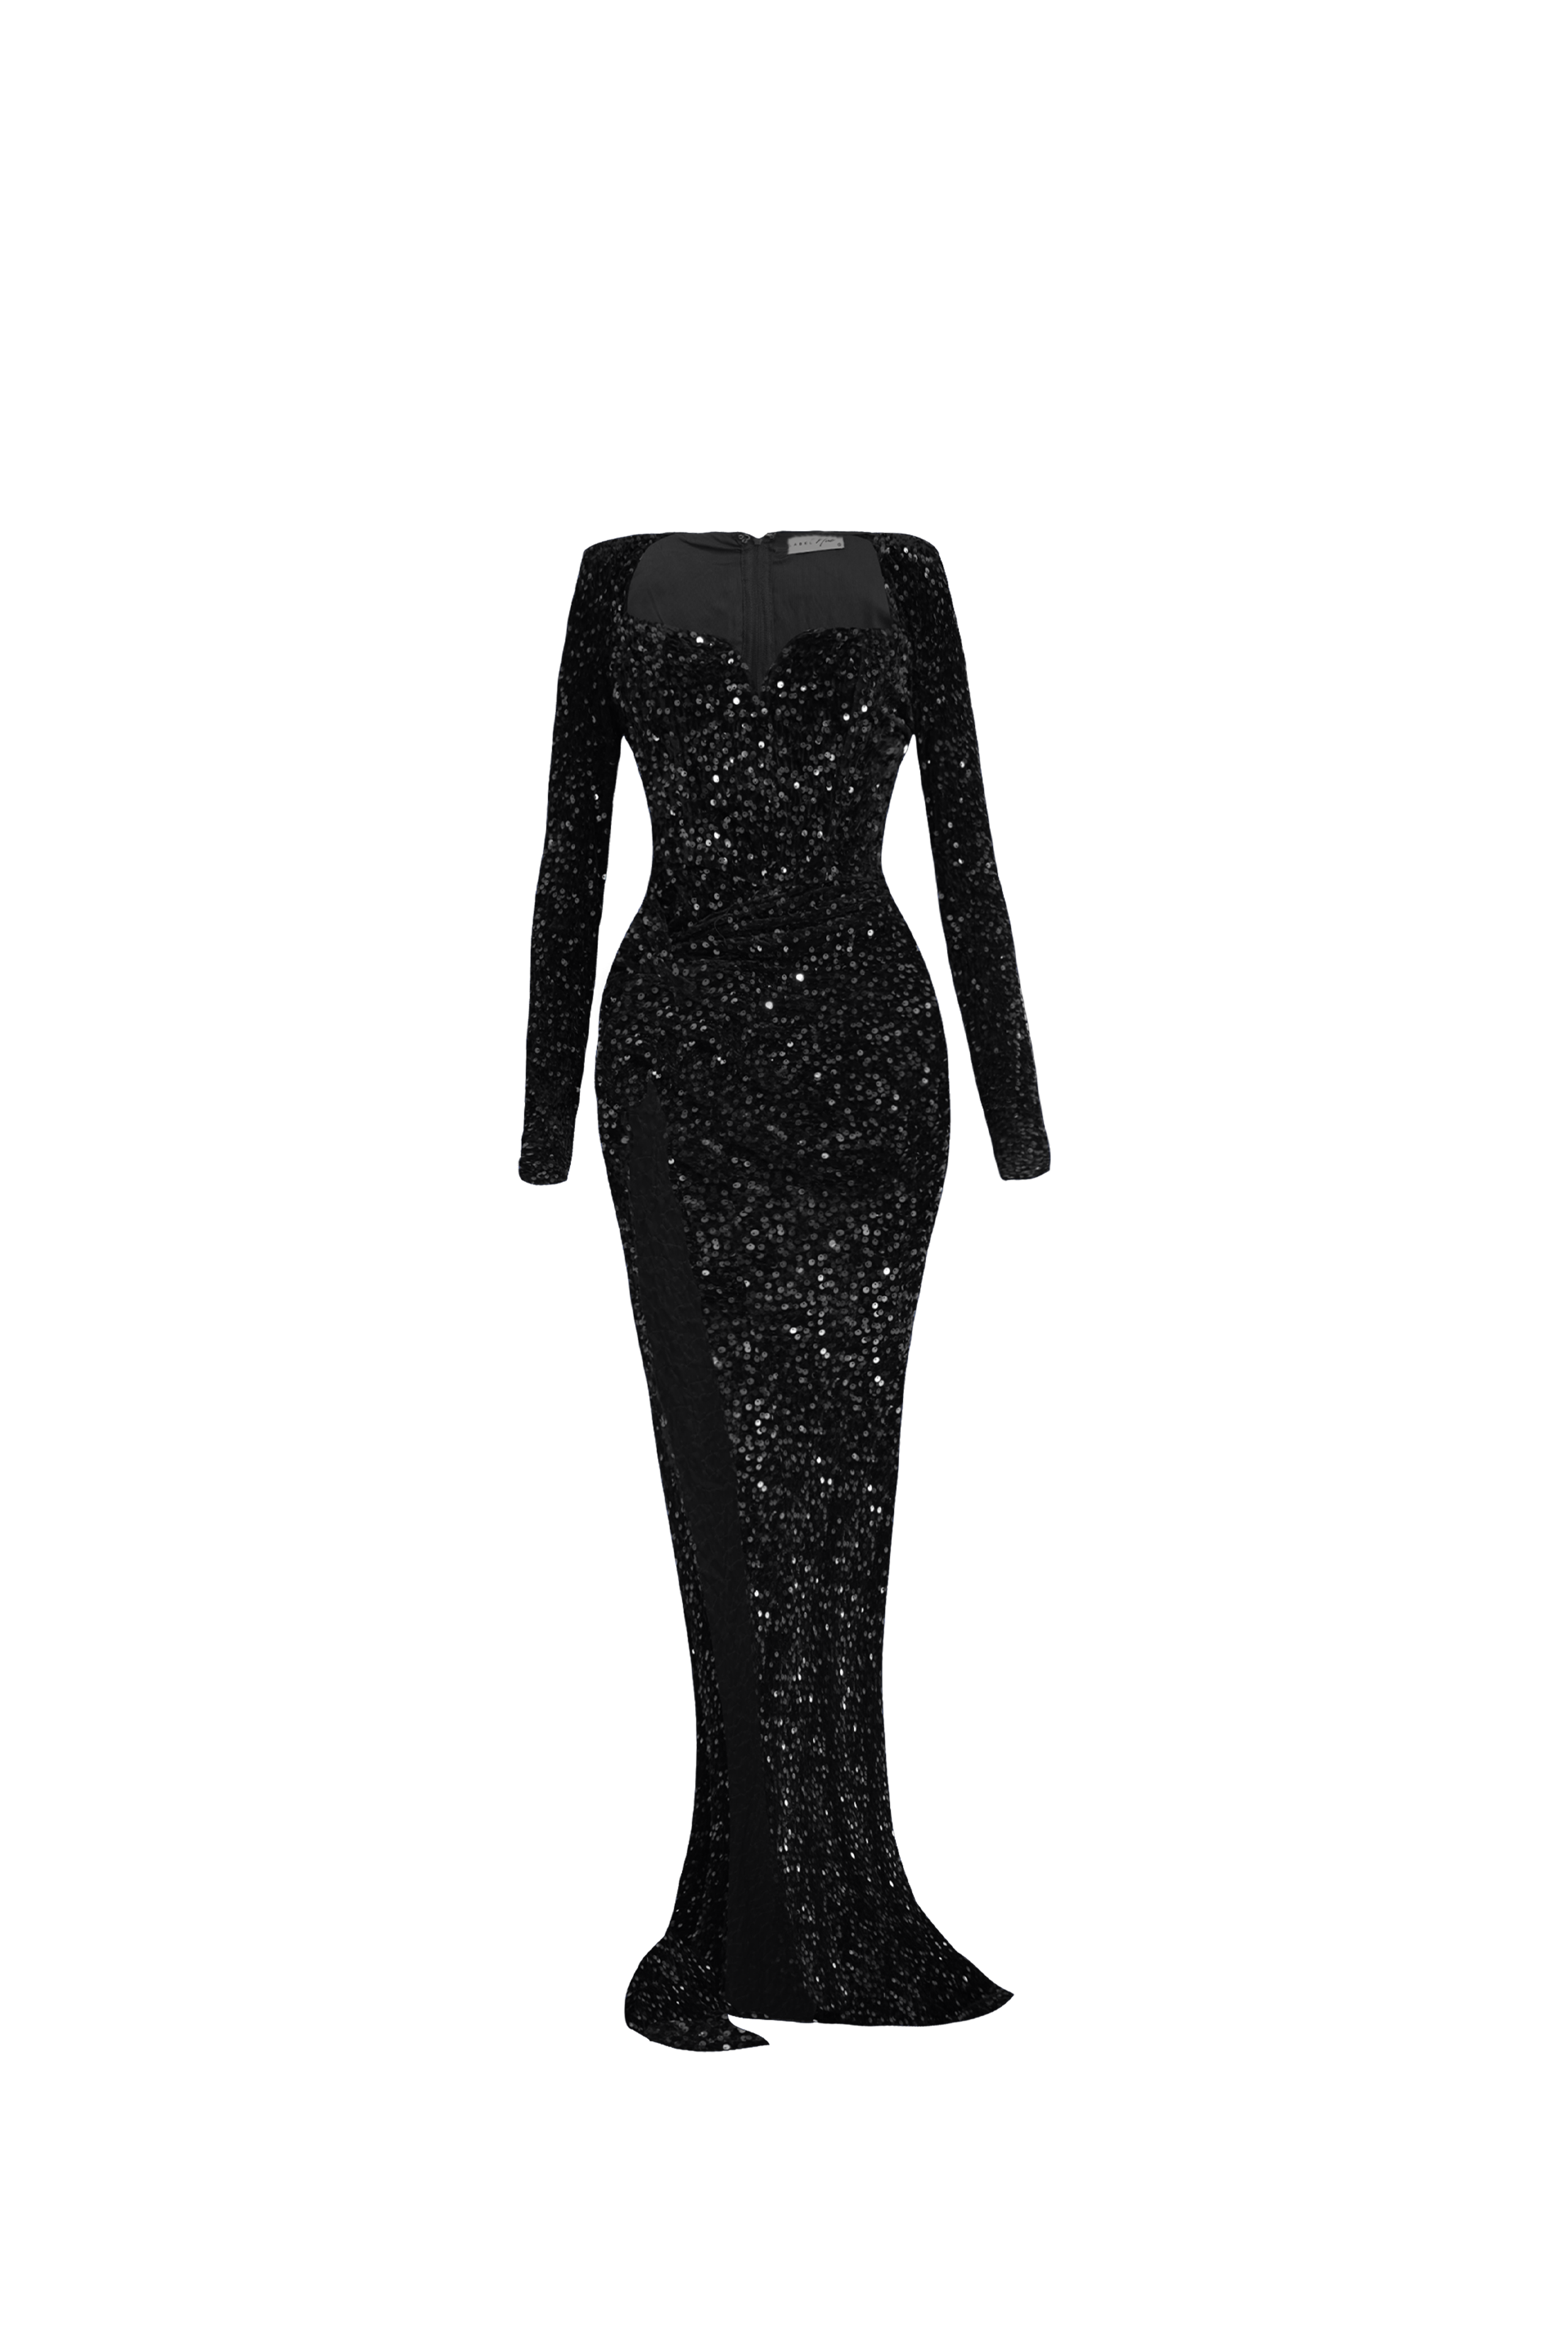 Kortni Black Dress